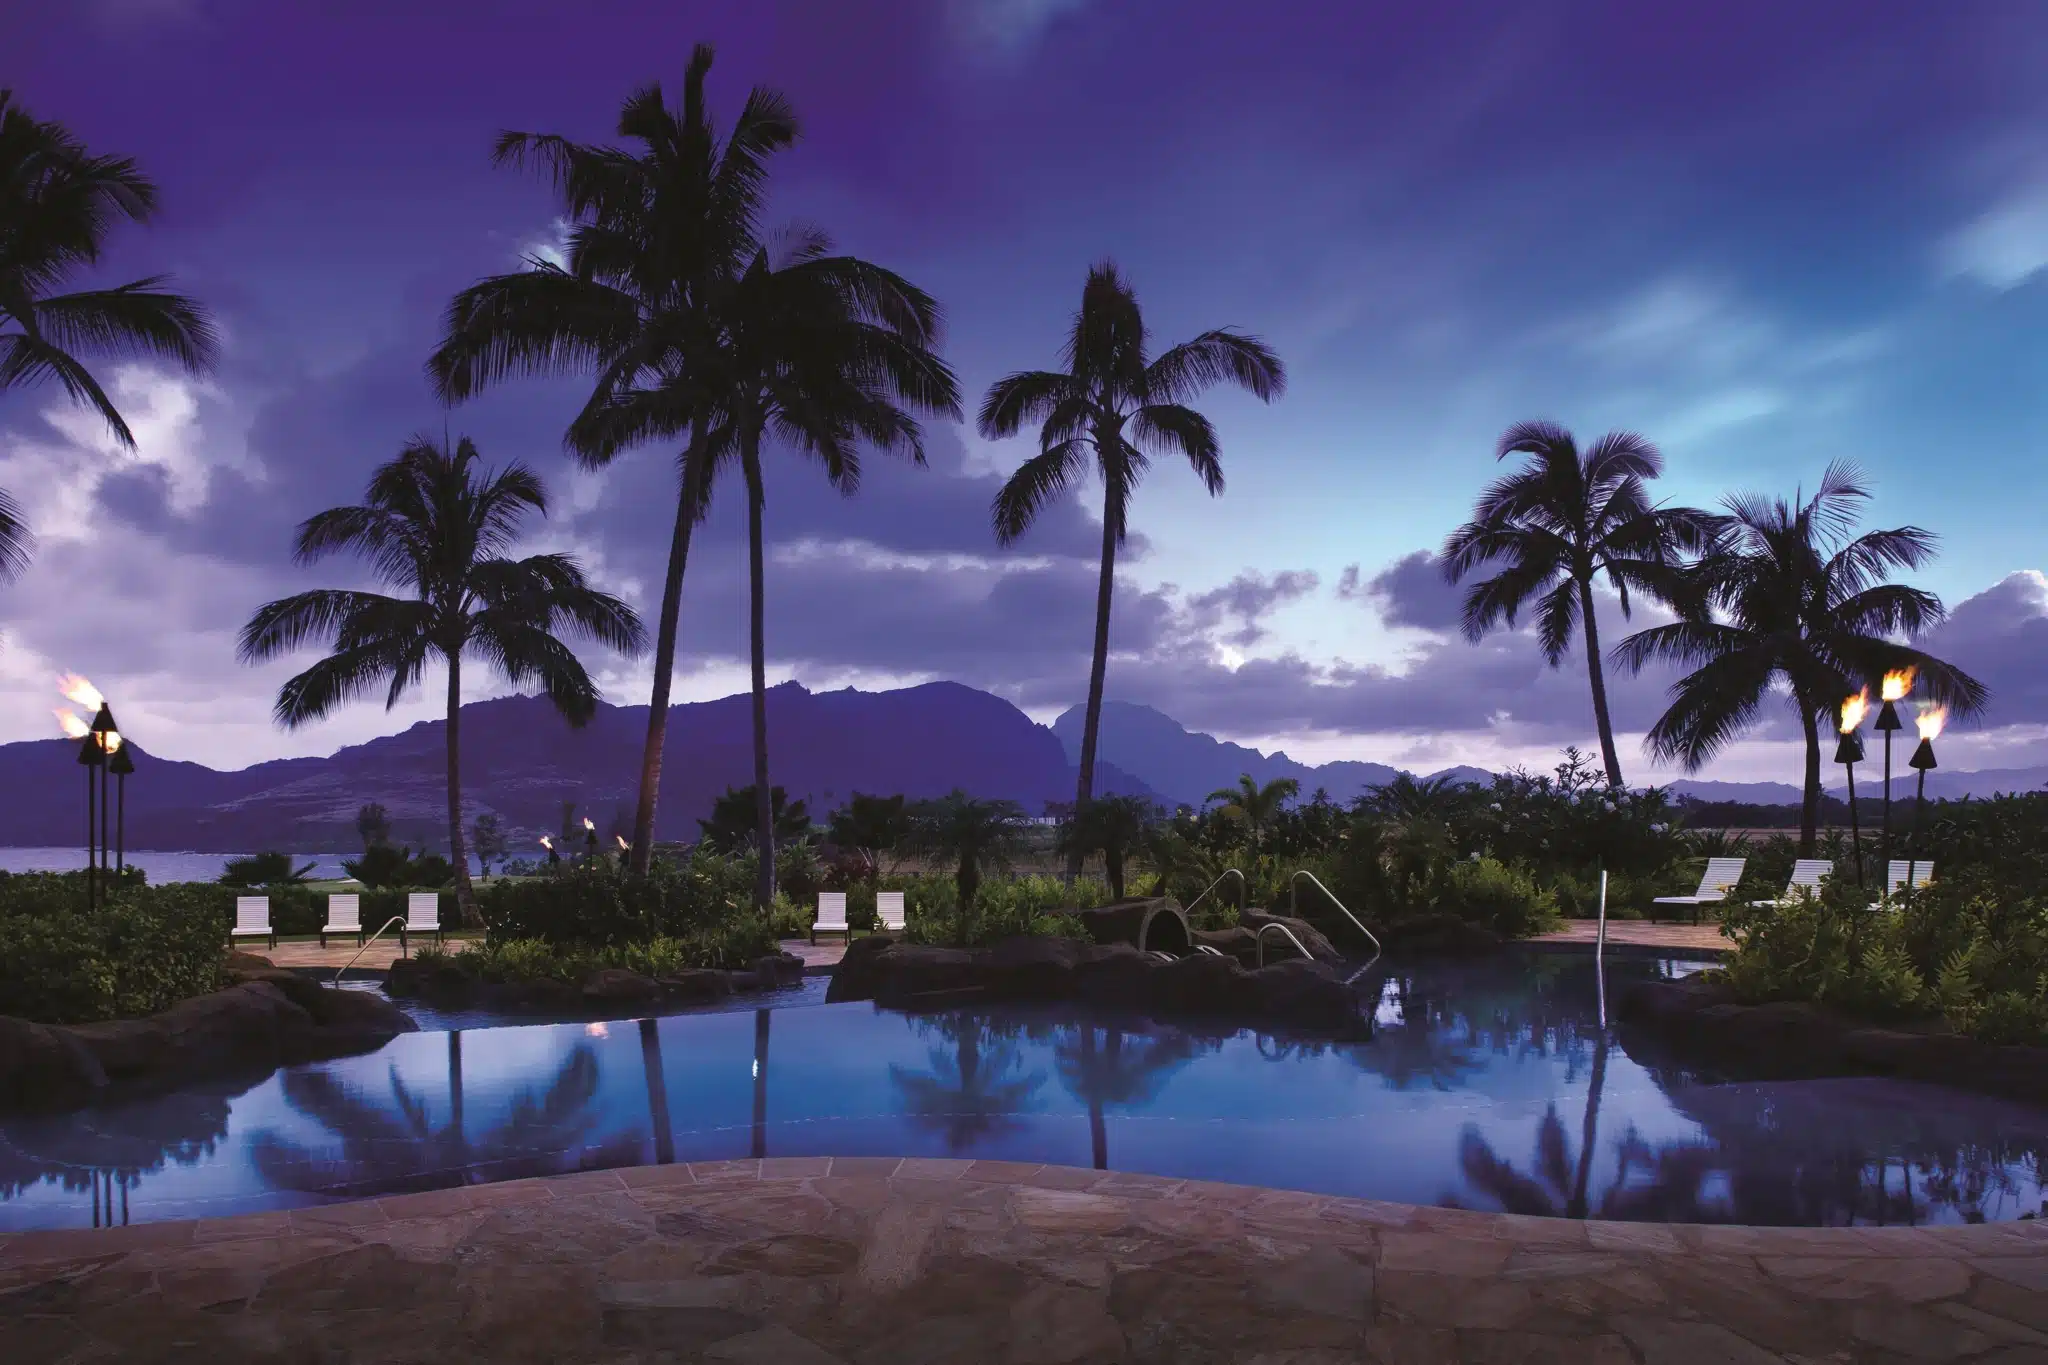 Marriott’s Kauai Lagoons - Kalanipu’u is a Hotel located in the city of Lihue on Kauai, Hawaii